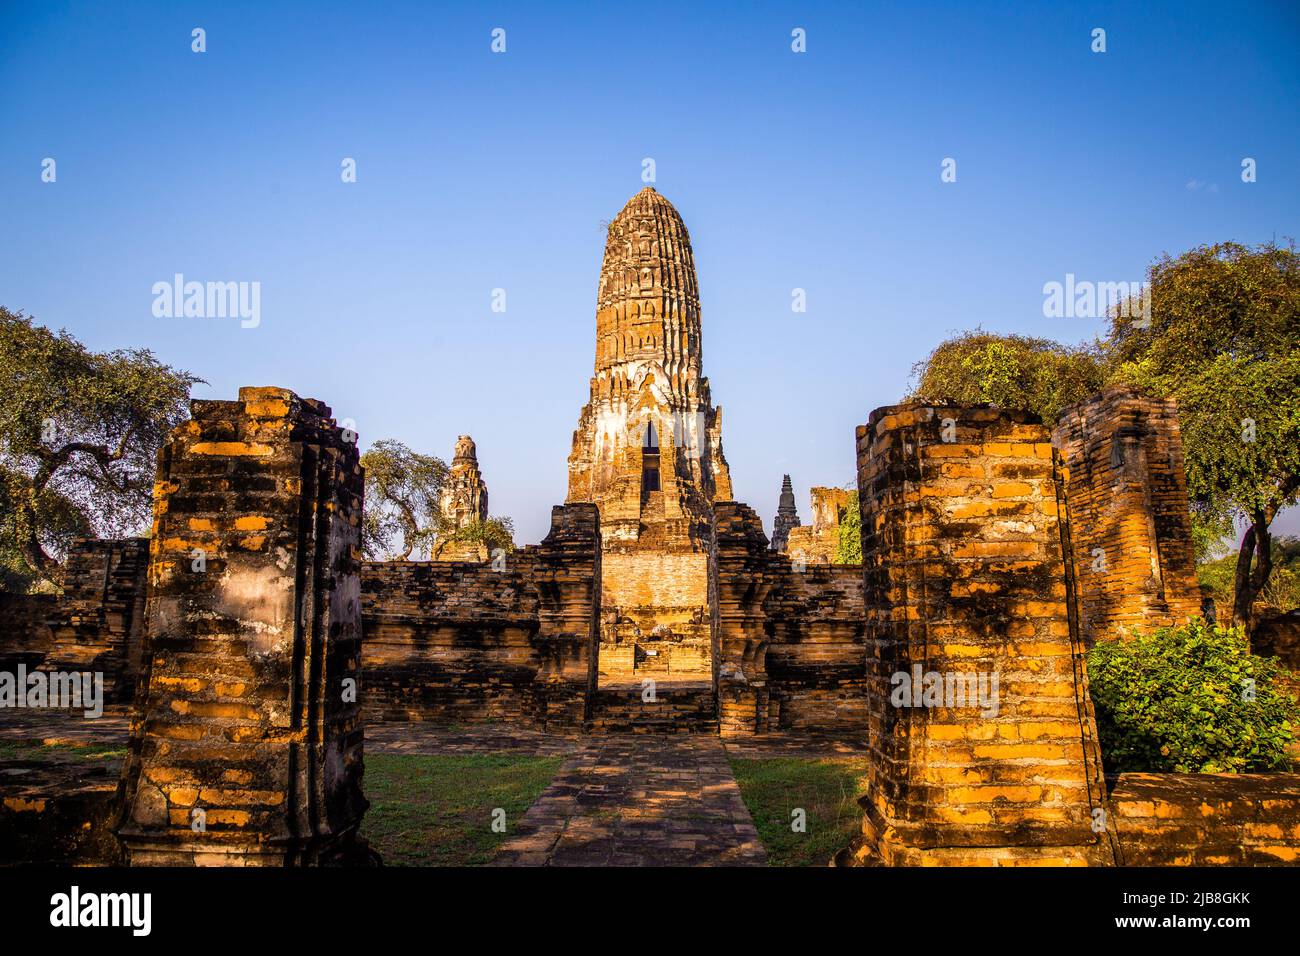 Wat Phra Ram ruin temple in Phra Nakhon Si Thailand Stock Photo - Alamy